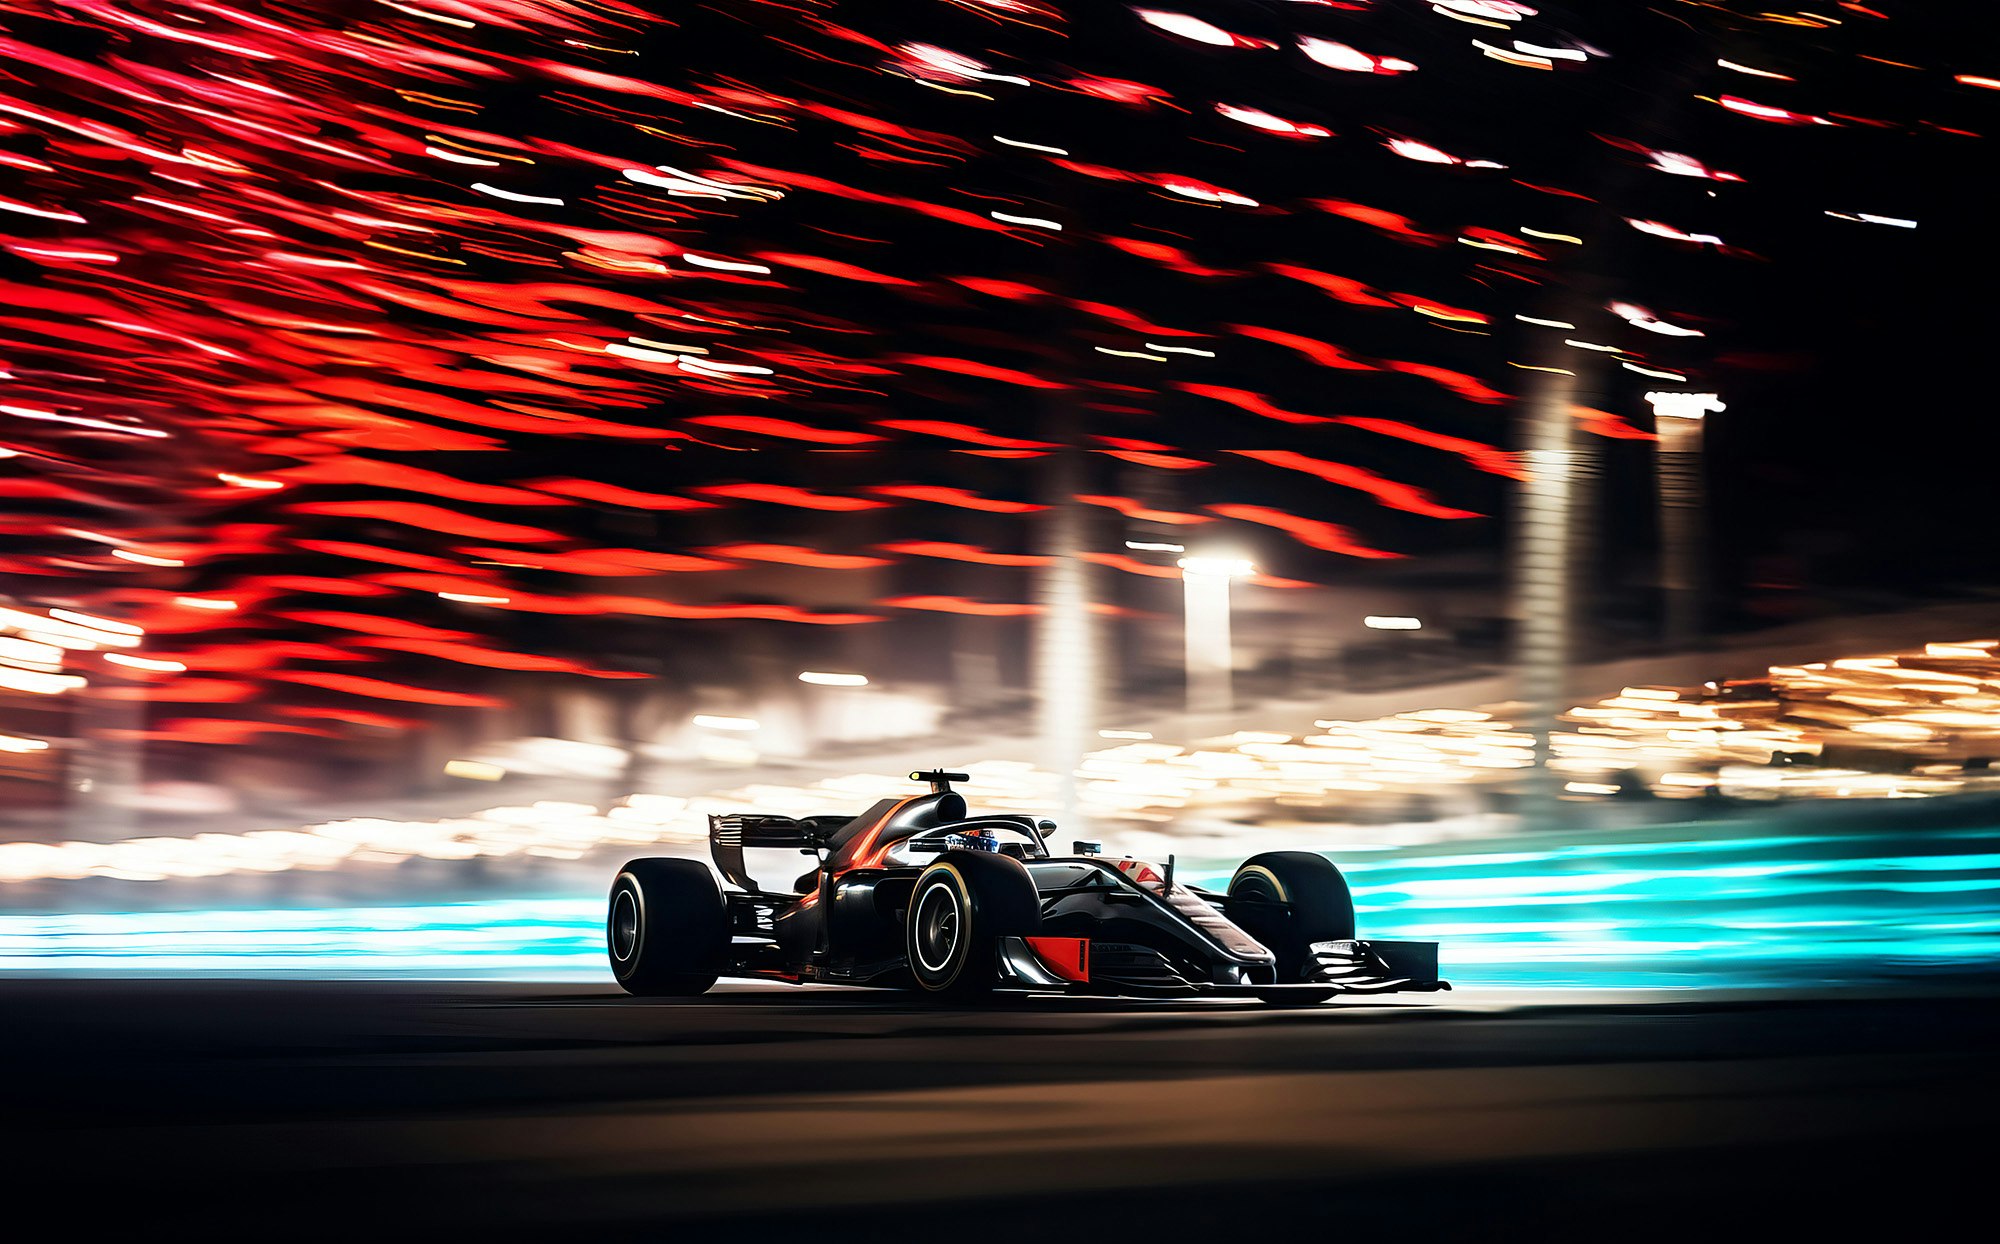 Formel 1-bil